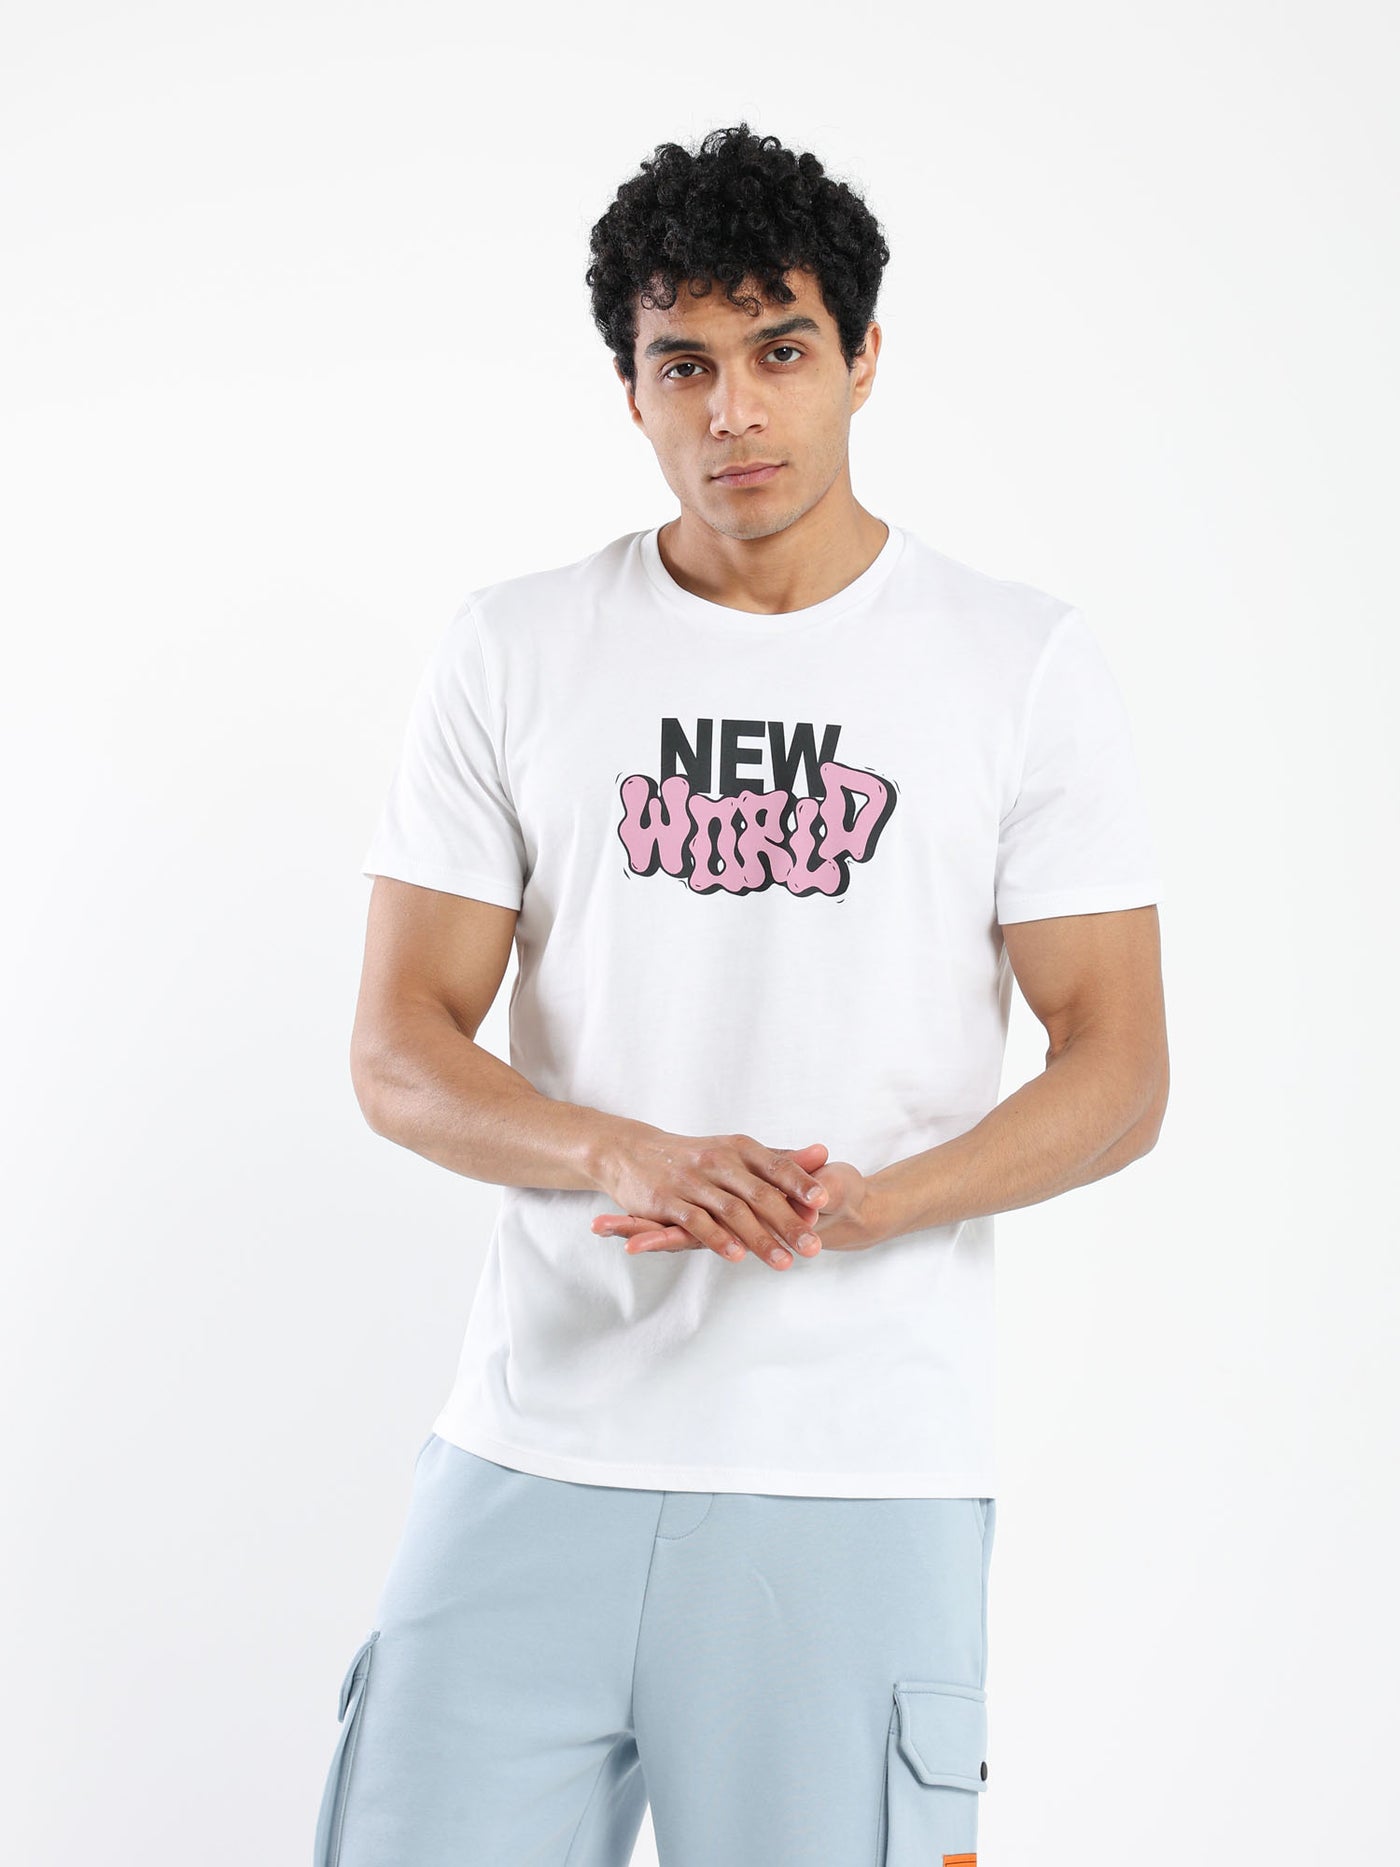 T-Shirt - "New World" Front Print